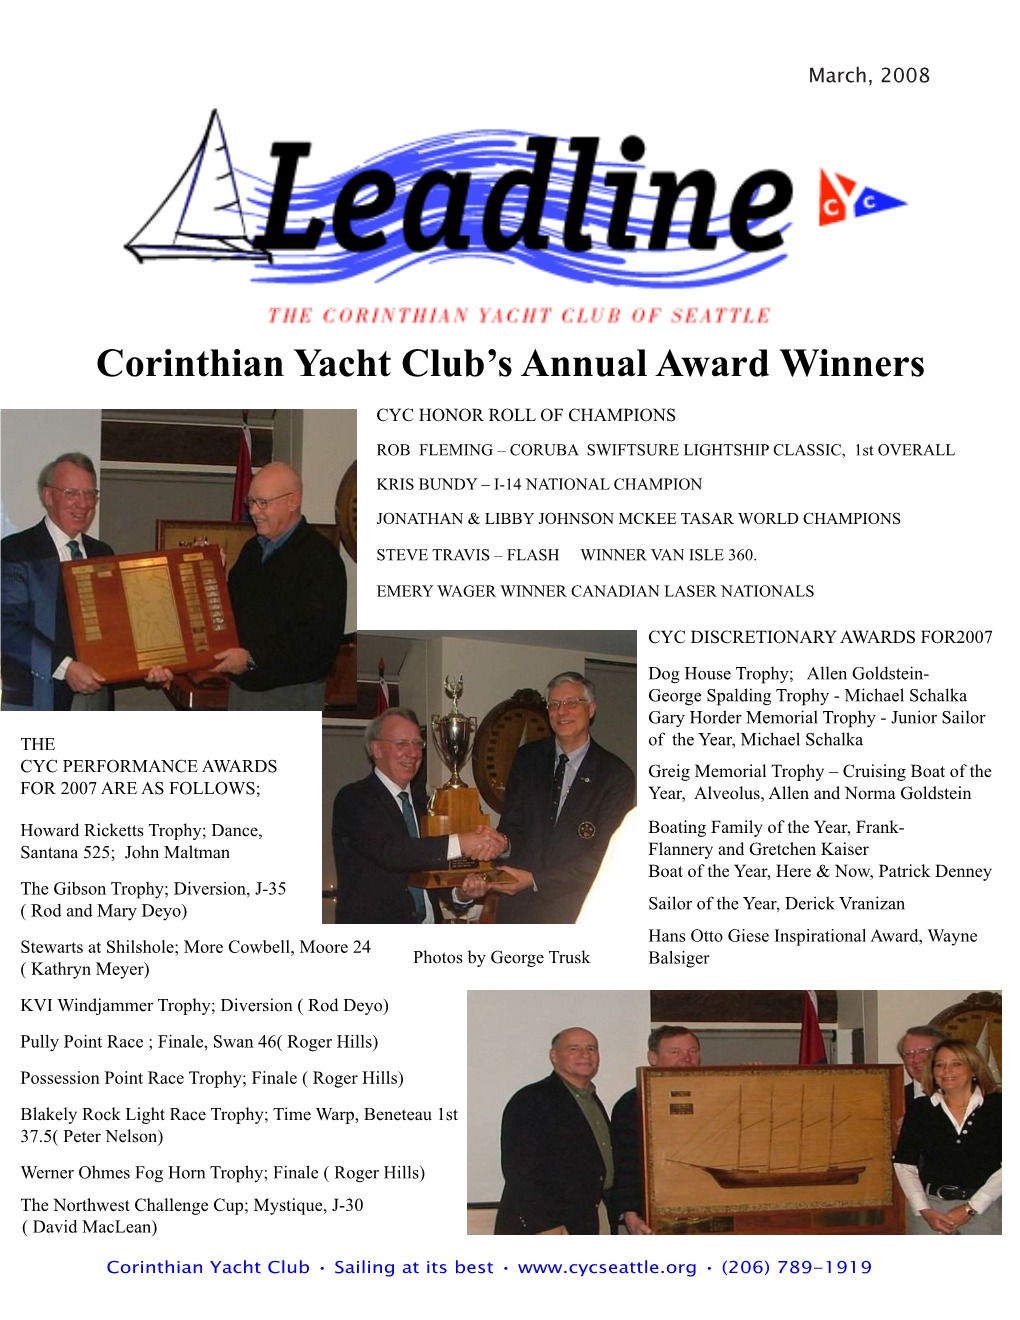 Corinthian Yacht Club's Annual Award Winners